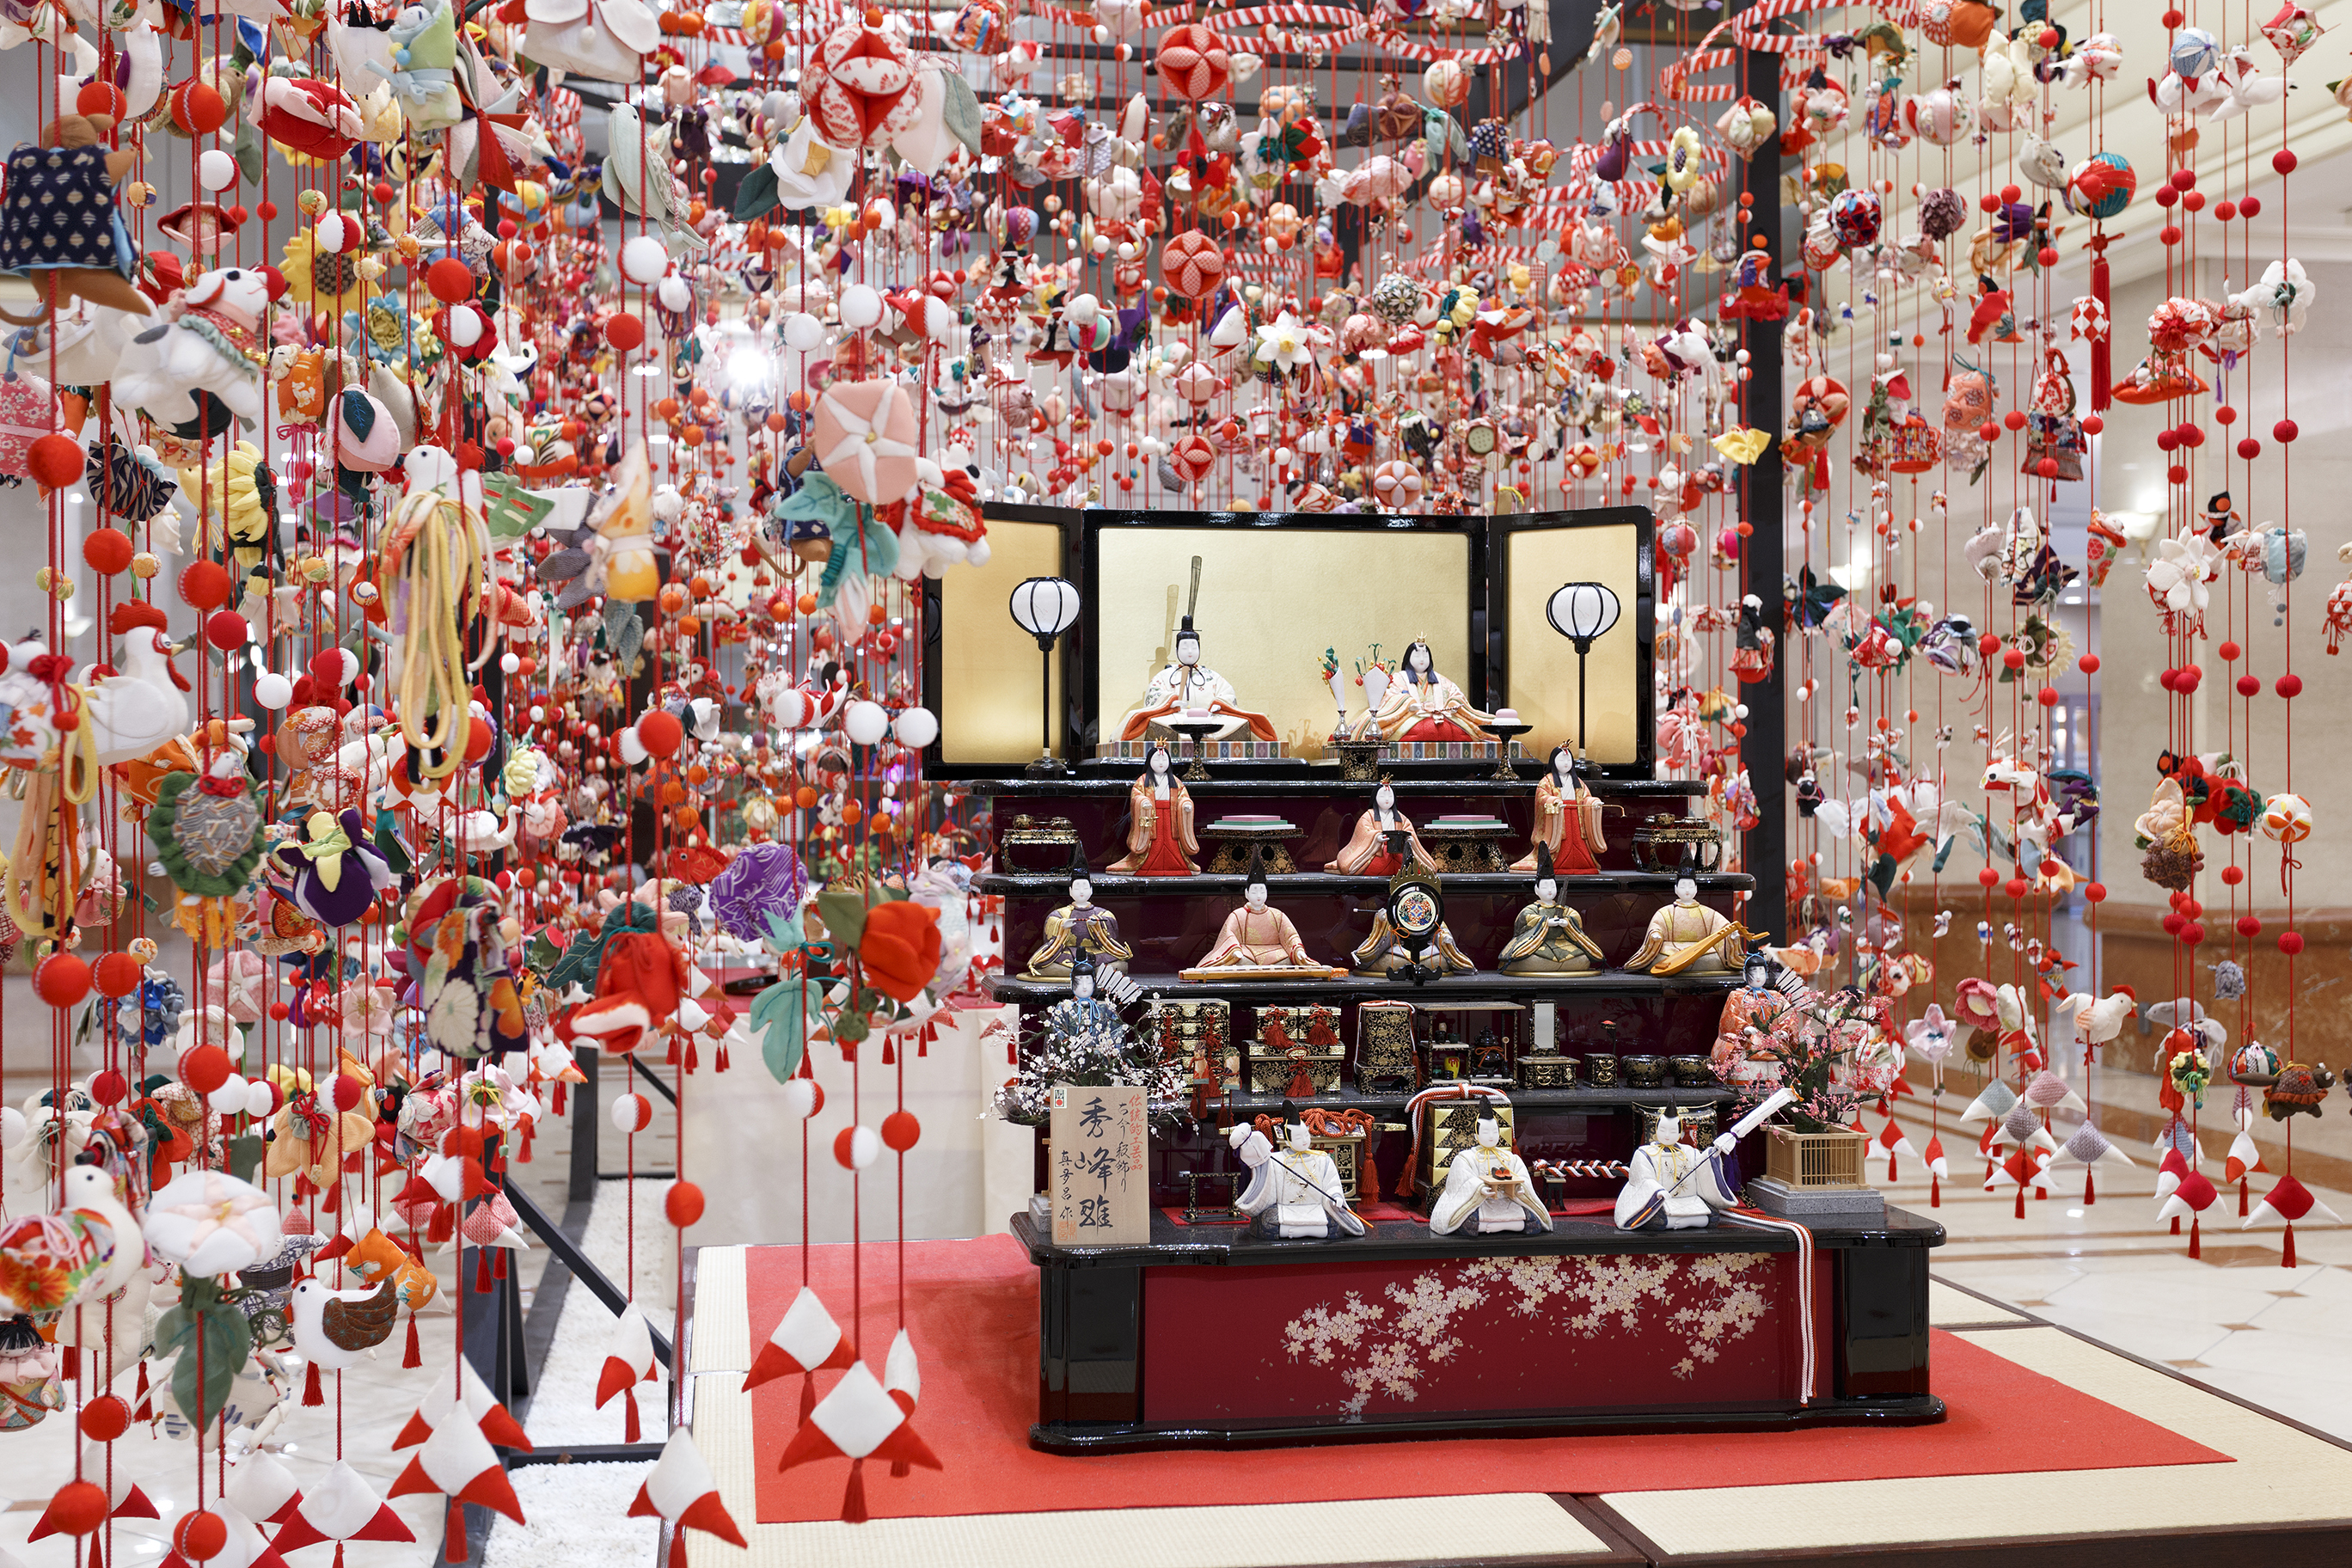 Keio Plaza Hotel Hosts “Hina-Matsuri” Girls' Doll Festival Art Exhibition | Business Wire